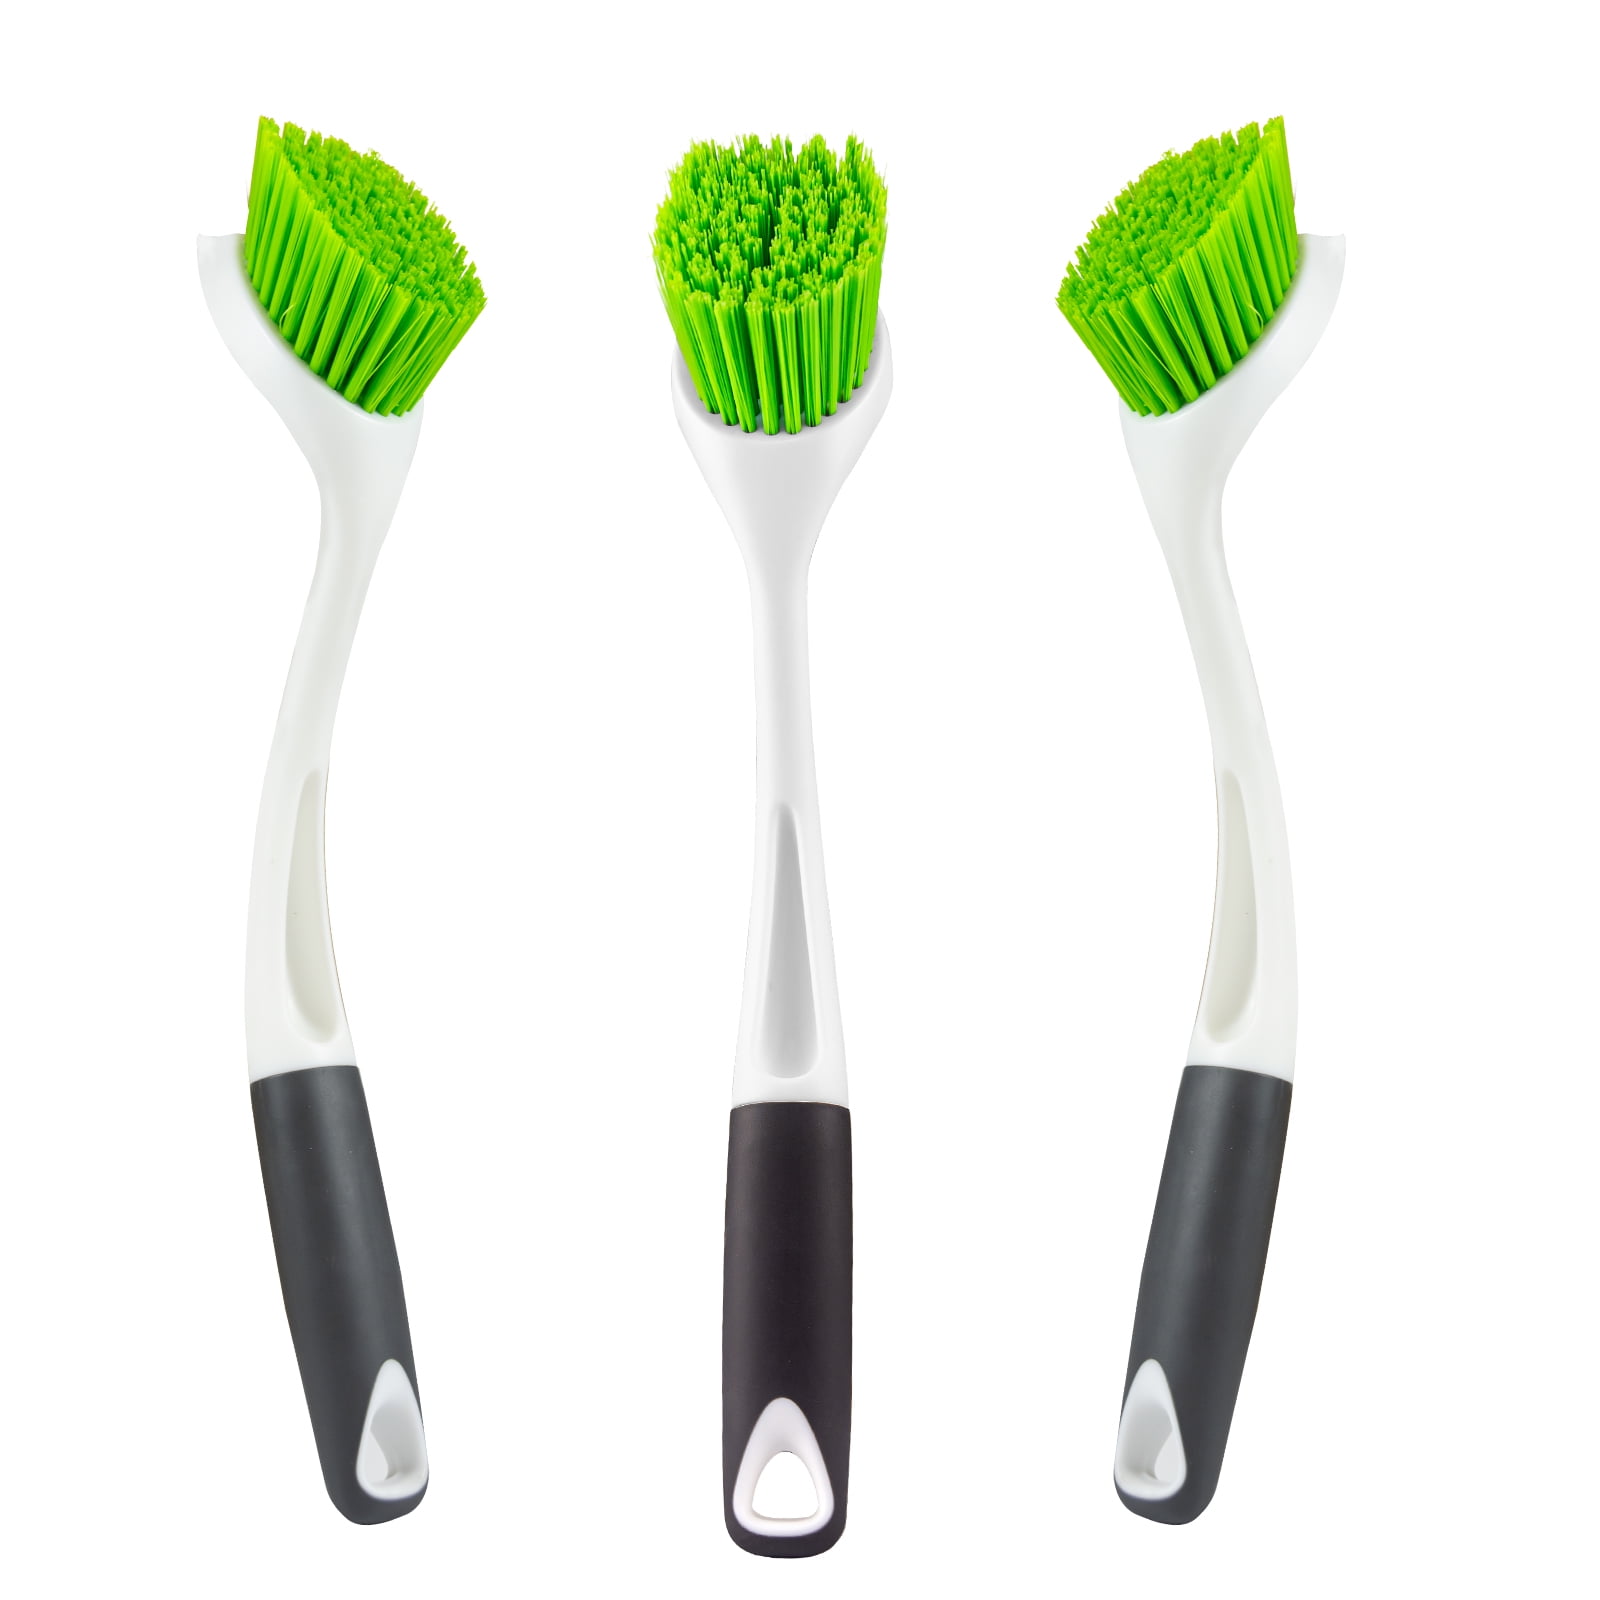 Ittaho 3 Pcs Dish Scrubbing Brush, Kitchen Cleaning Brush with Scraper Edge, Green